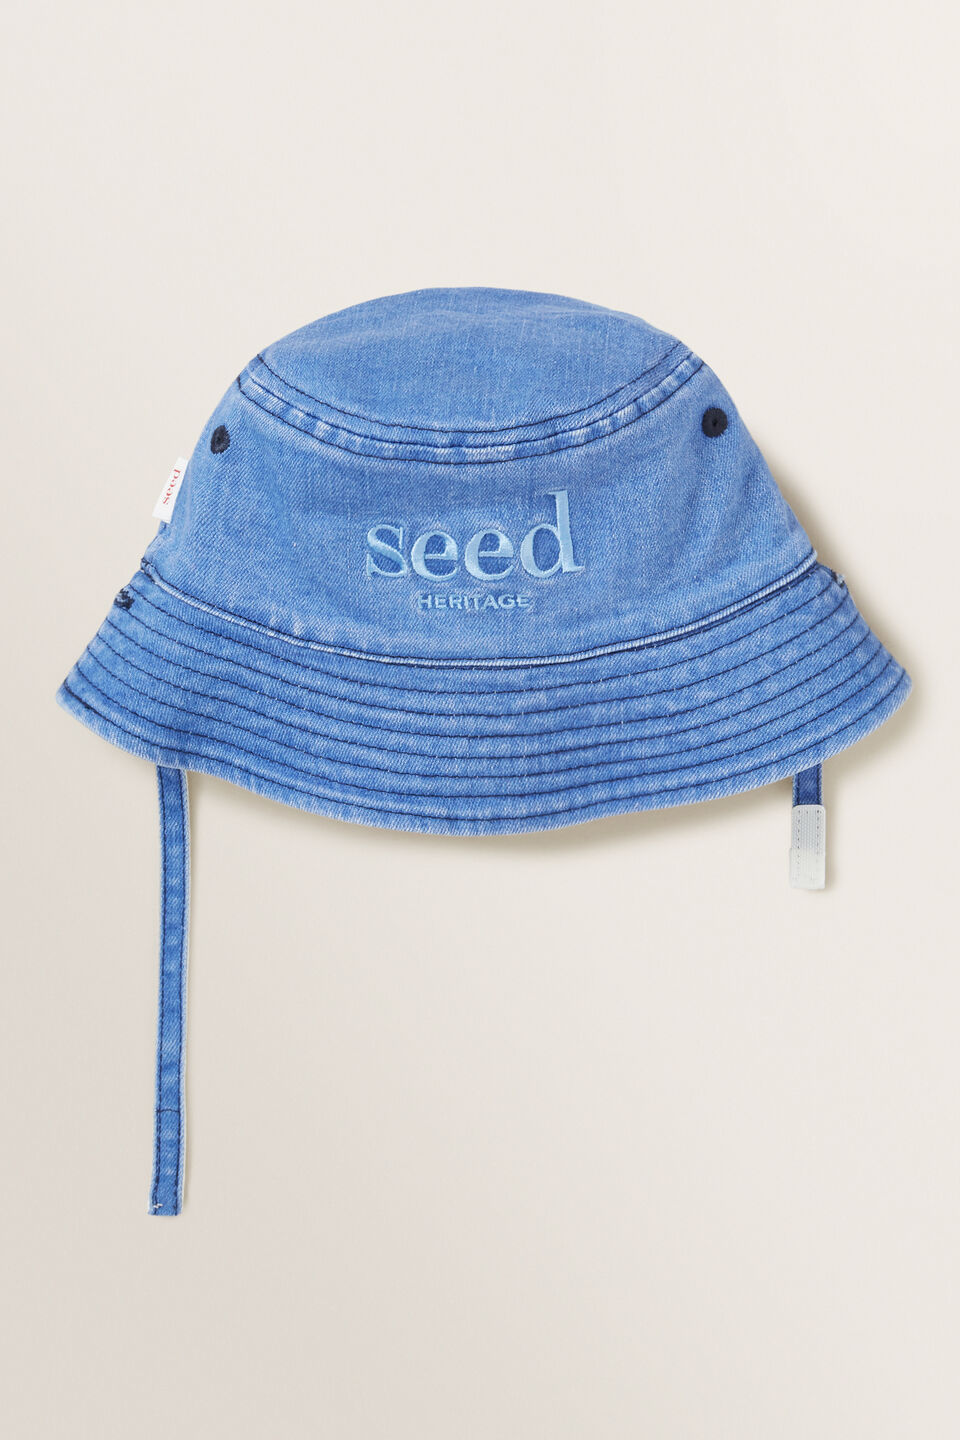 Seed Bucket Hat  Chambray